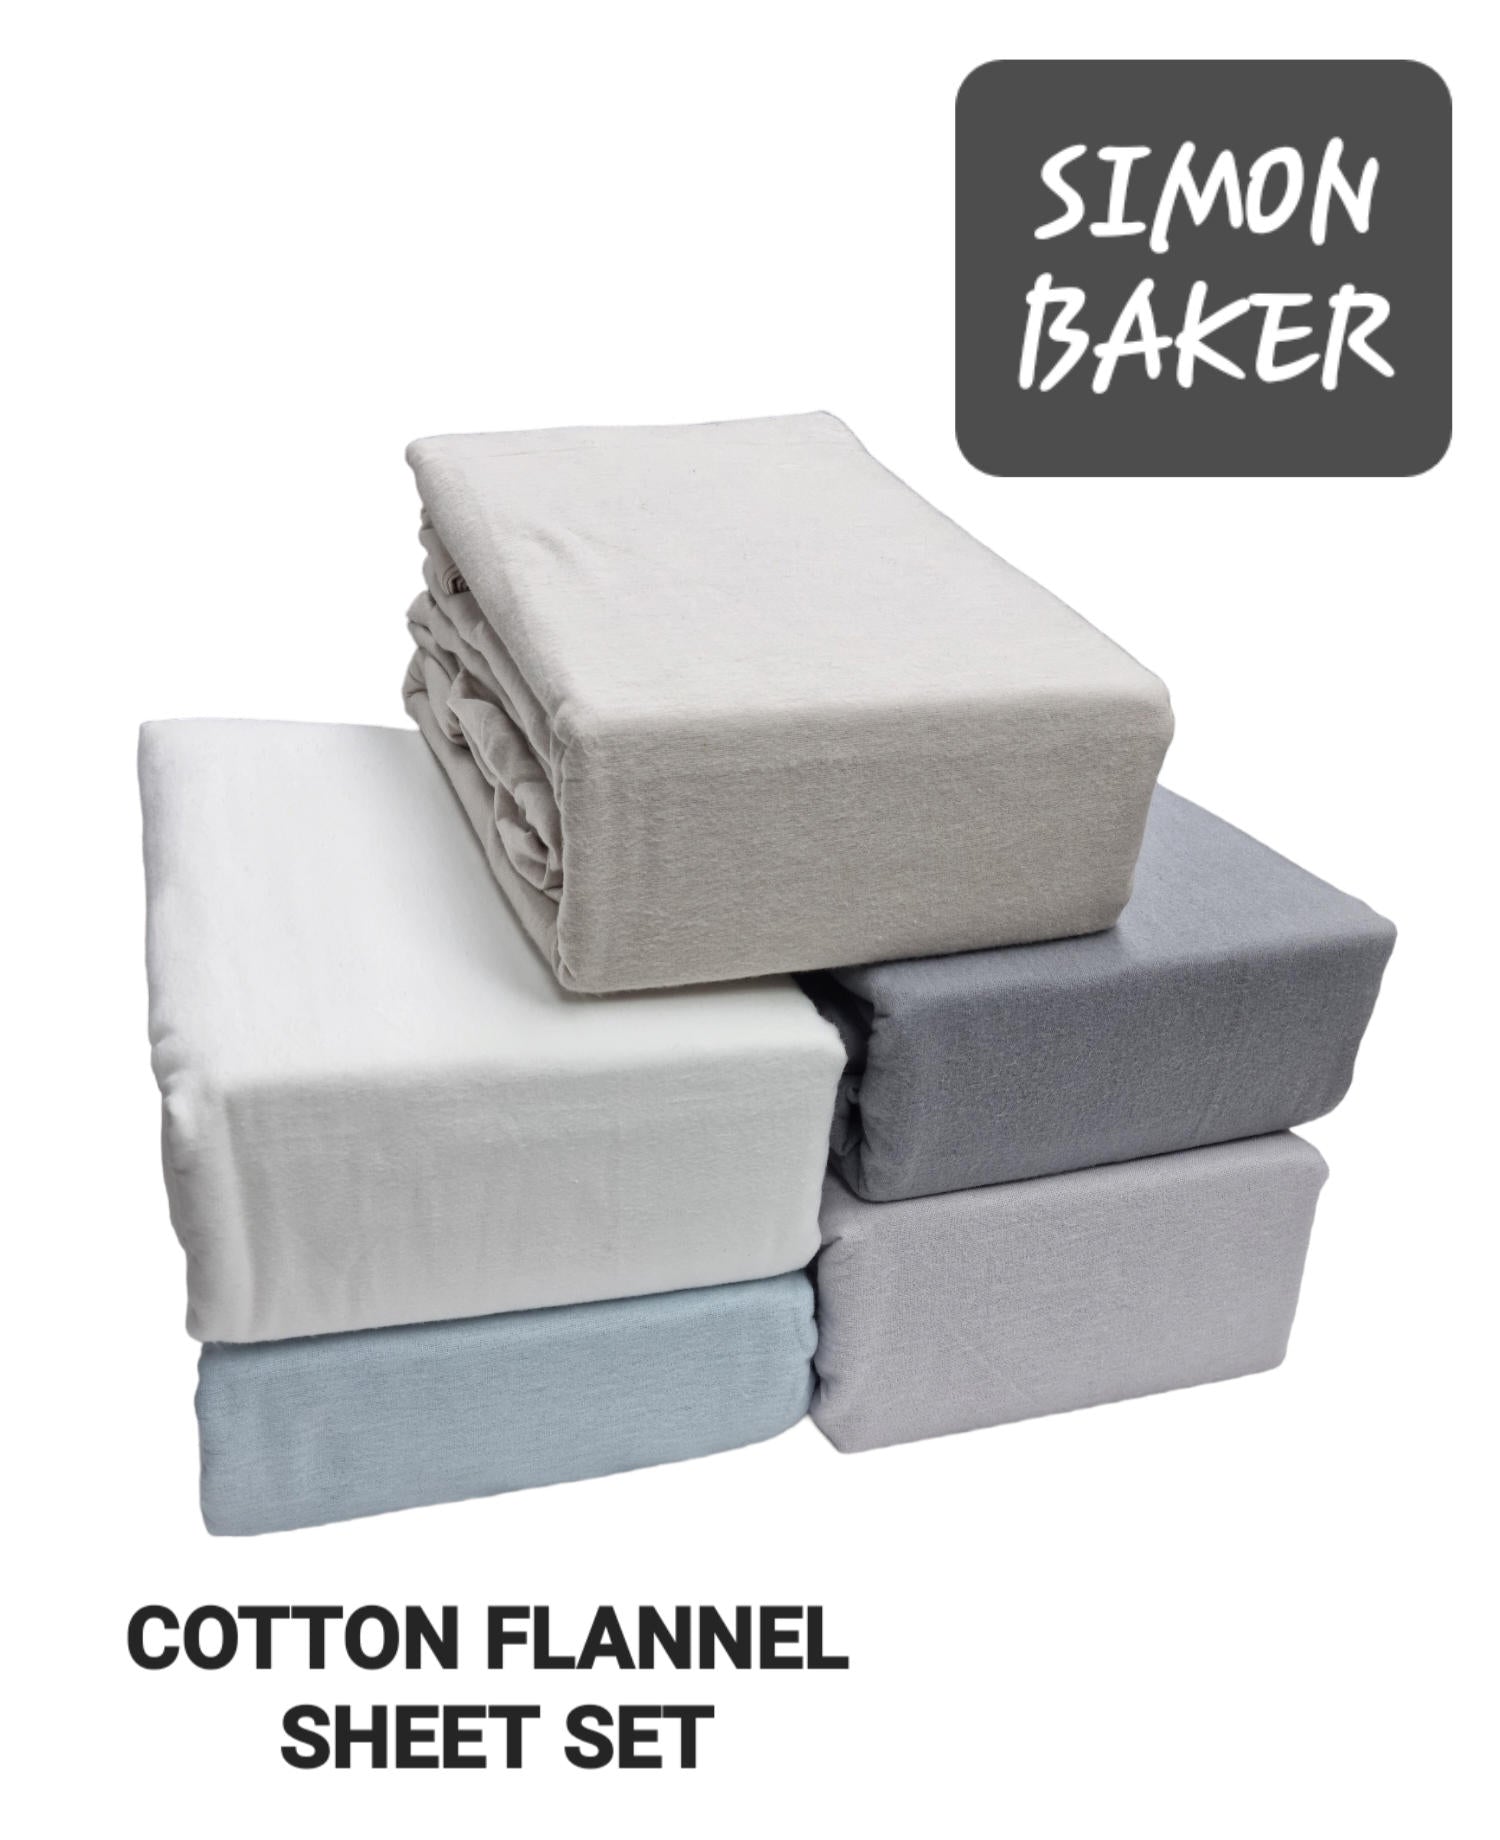 Simon Baker - Cotton Flannel Sheet Set - NATURAL